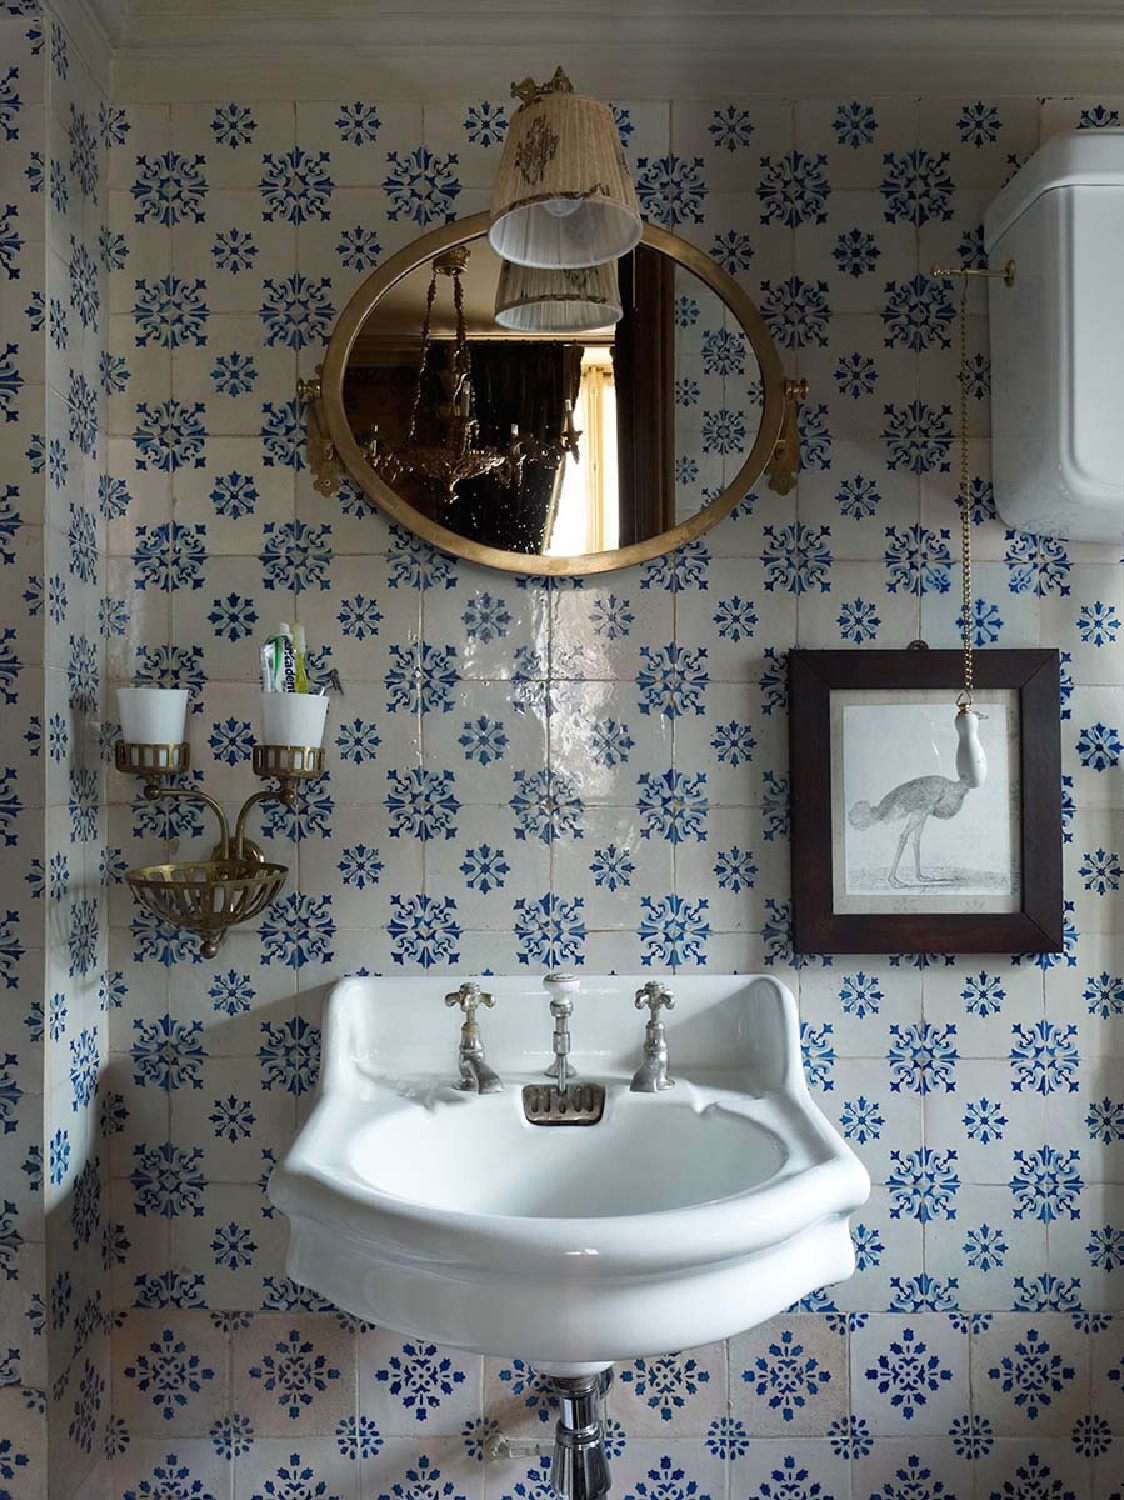 Studio Peregalli (photo: Luis Ridao) designed timeless bathroom with blue tiles and Old World style. #timelessbathroom #oldworldstyle #europeanelegance